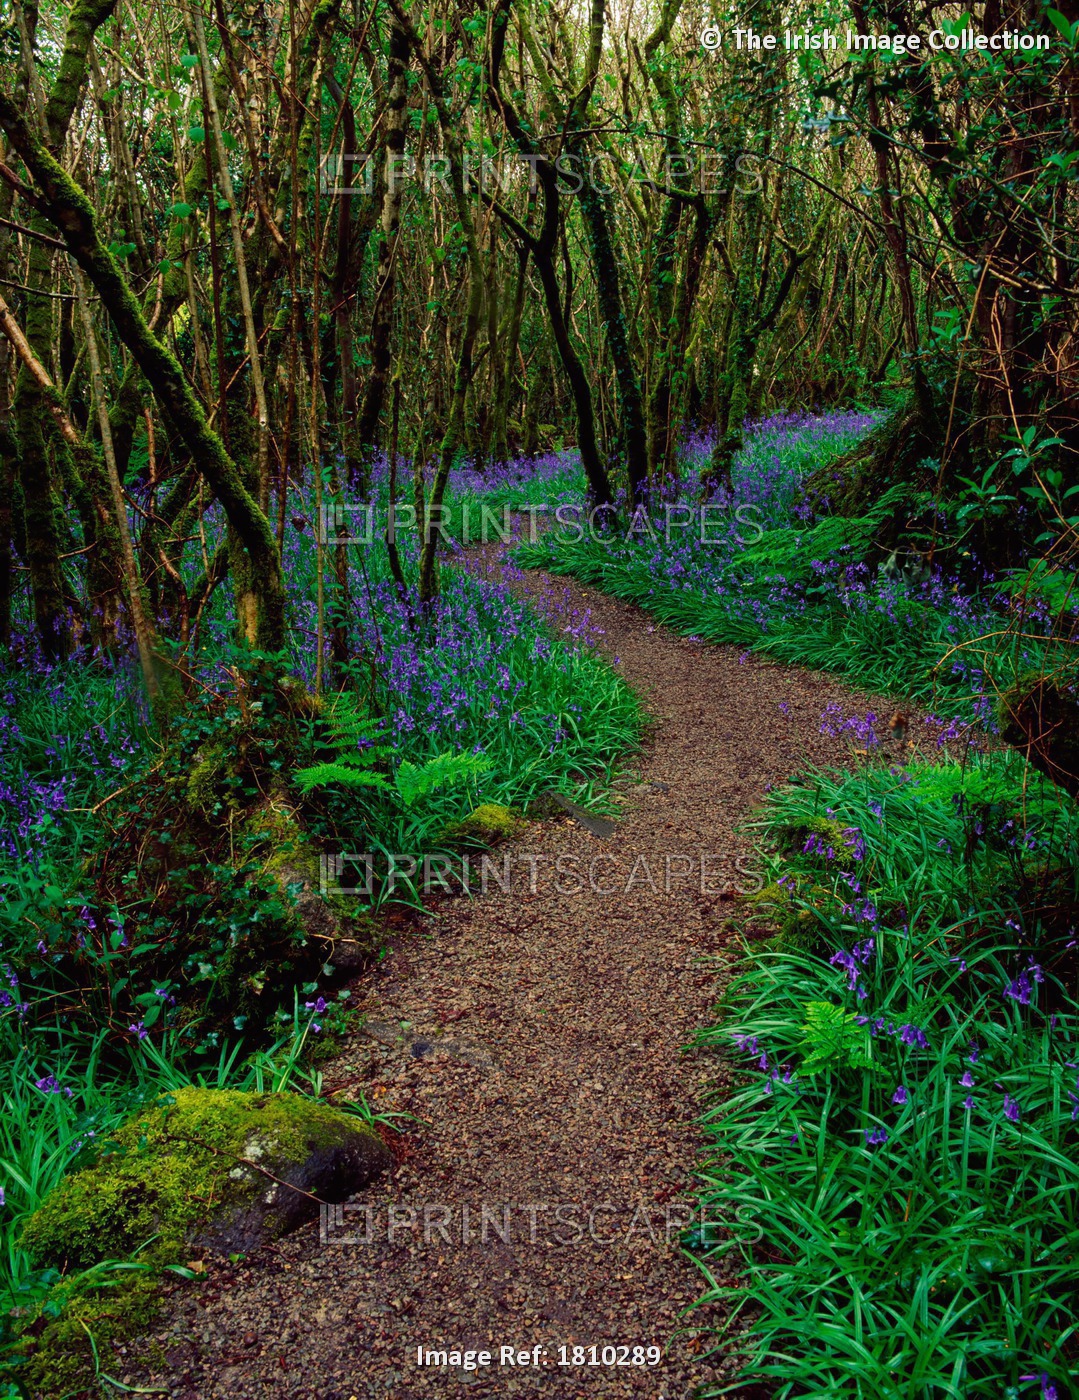 Ardcarrig, County Galway, Ireland, Hazel And Bluebells In Spring